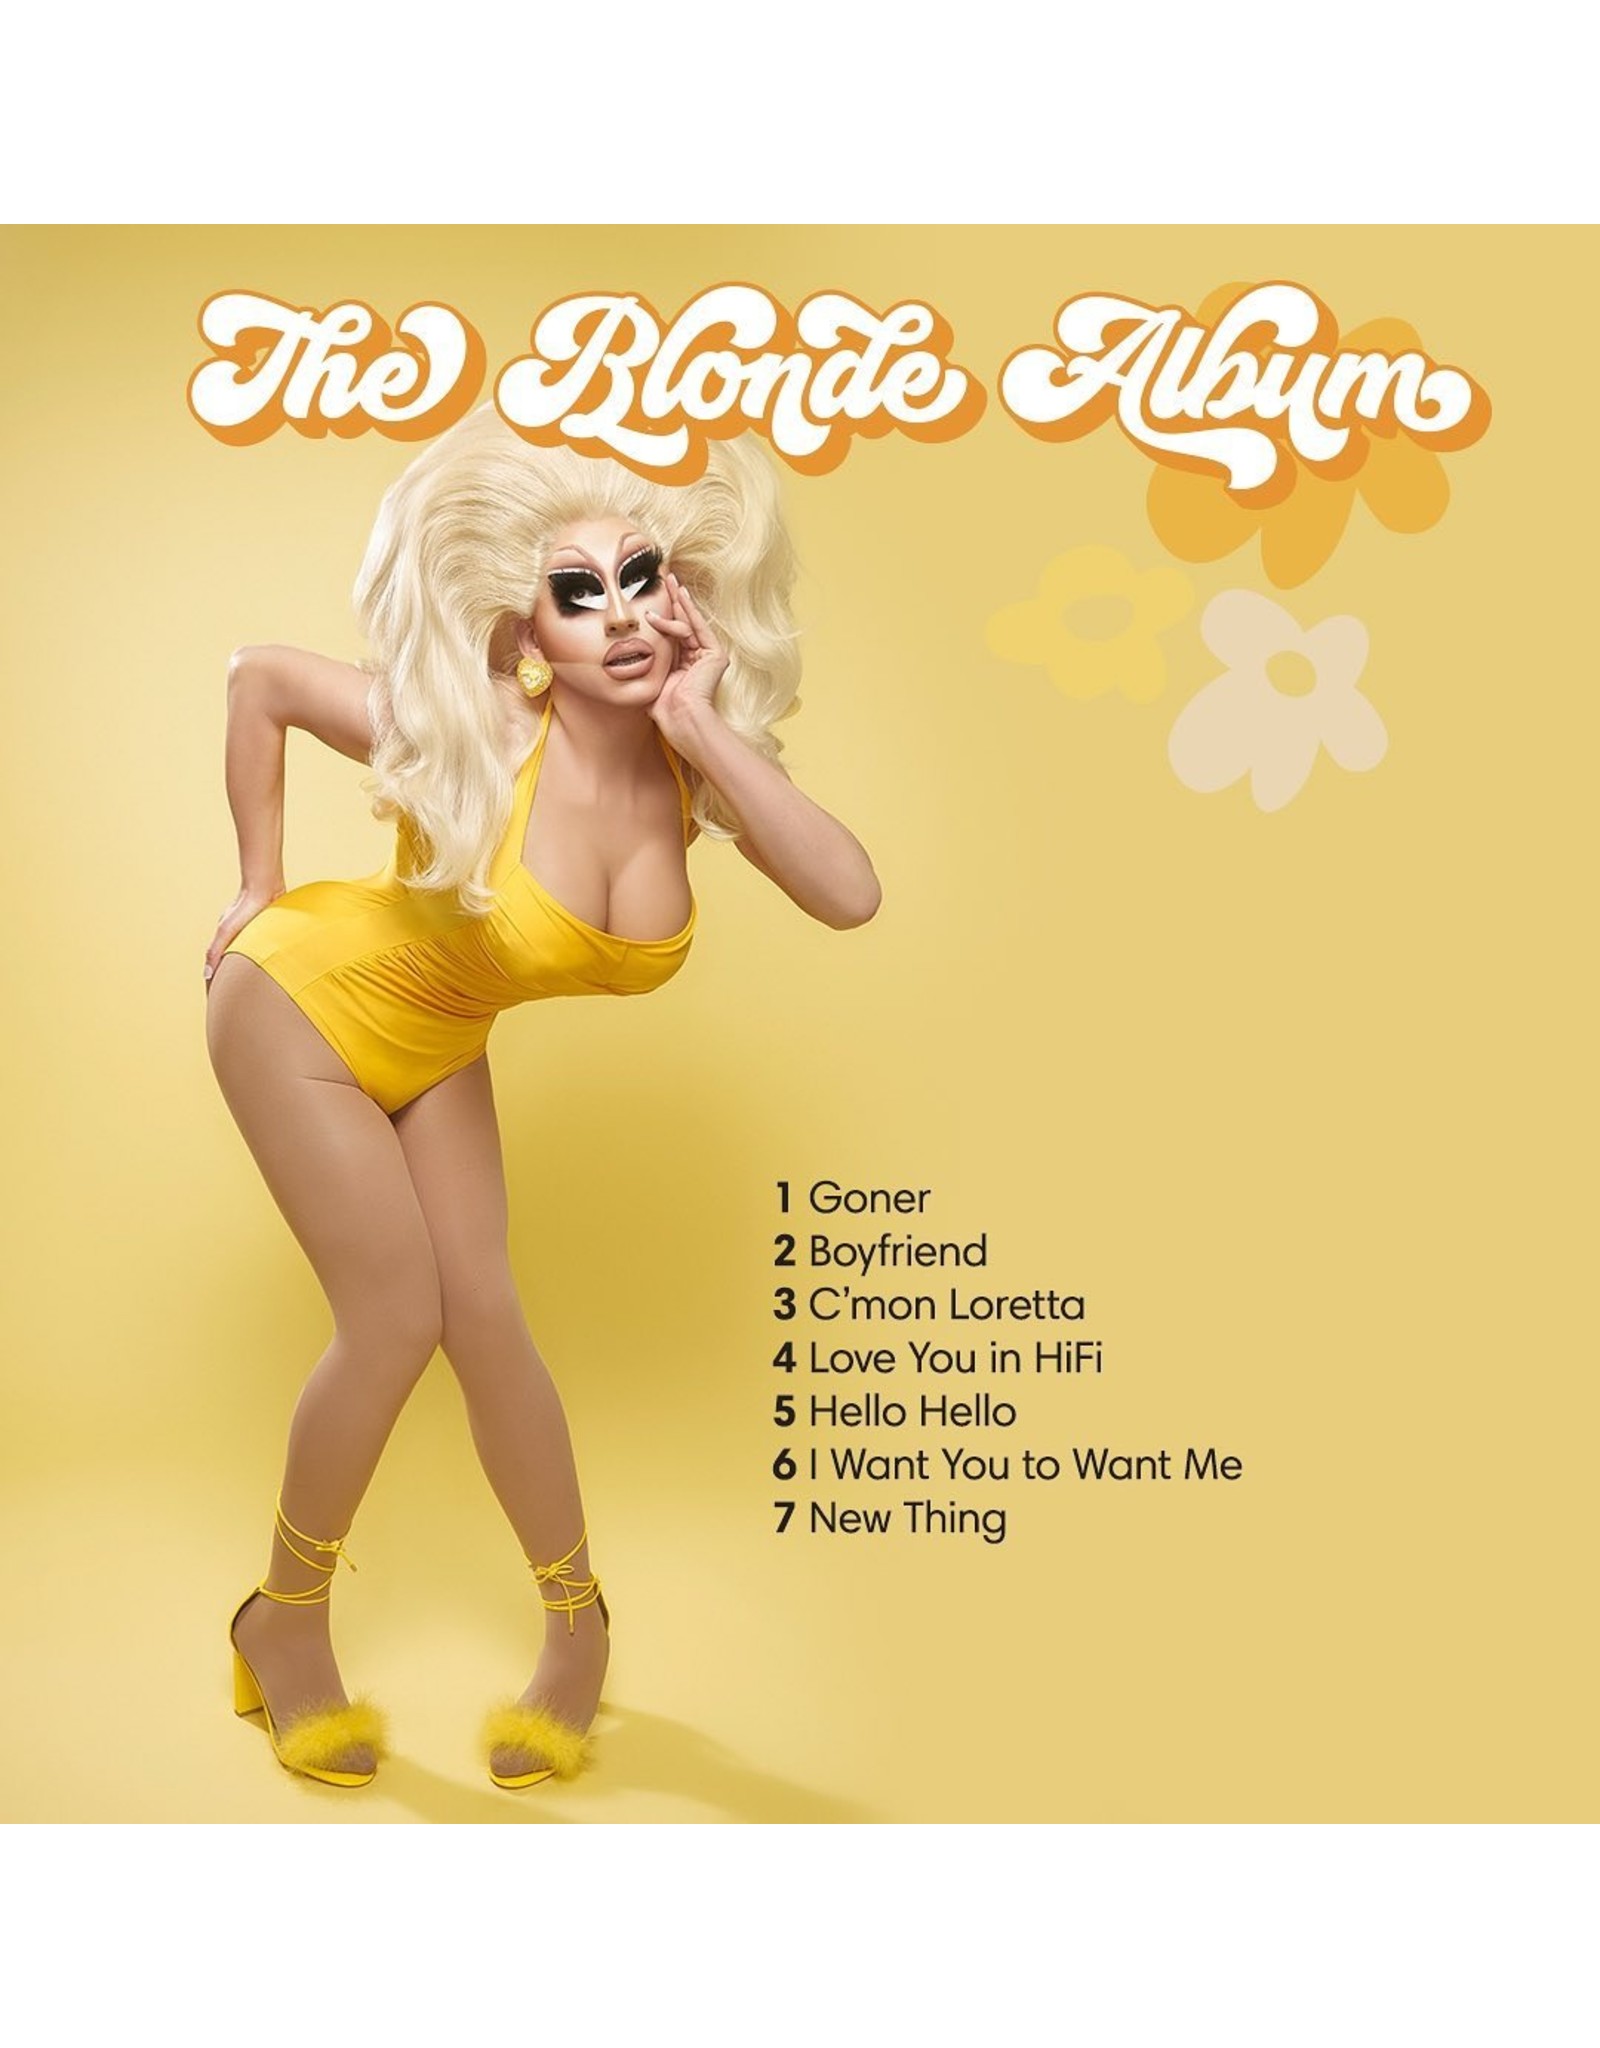 Trixie Mattel - The Blonde & Pink Albums